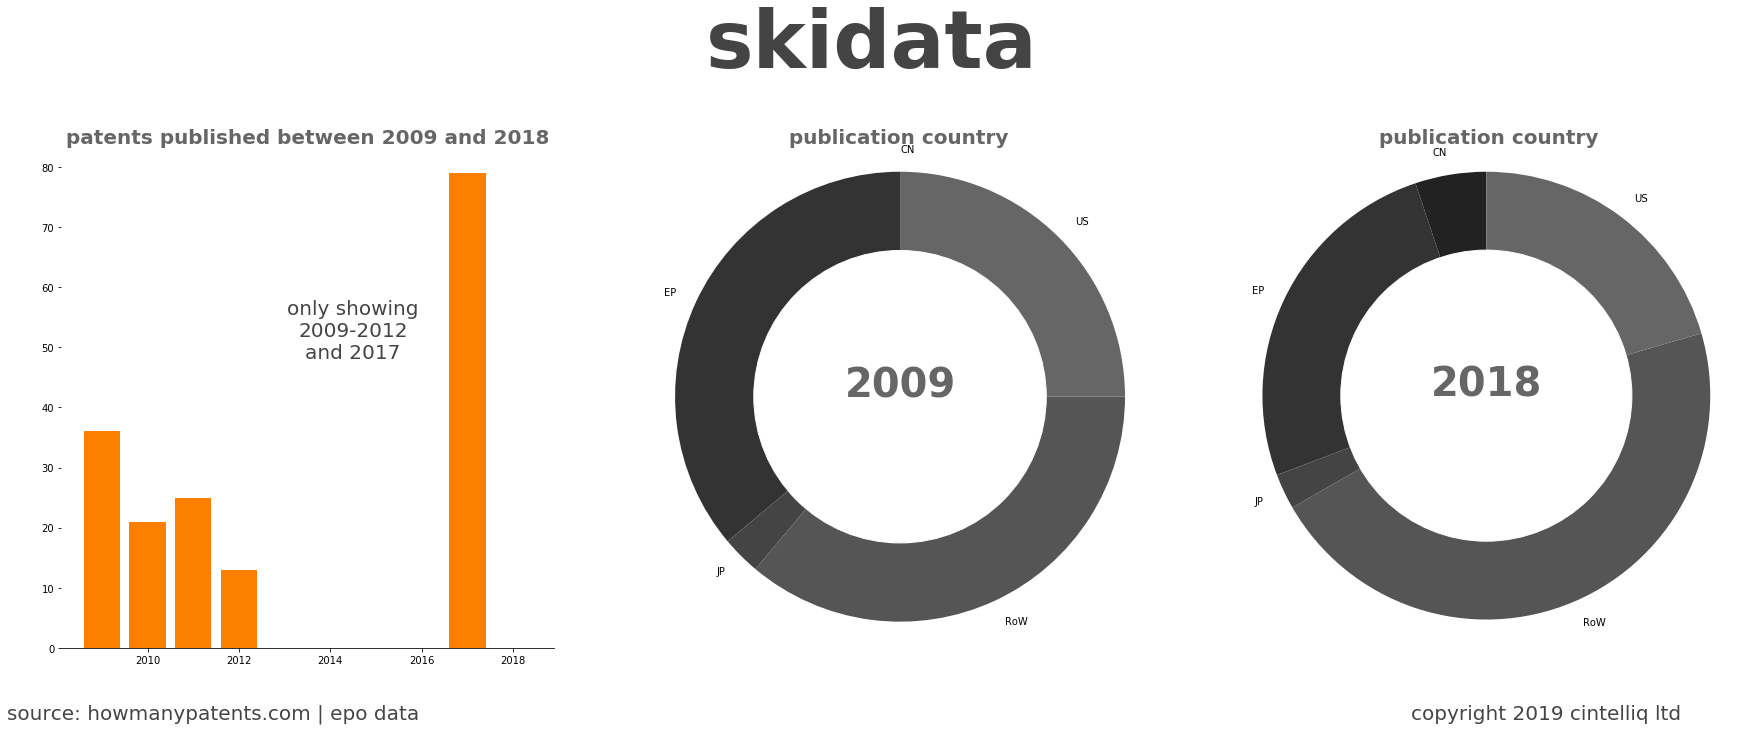 summary of patents for Skidata